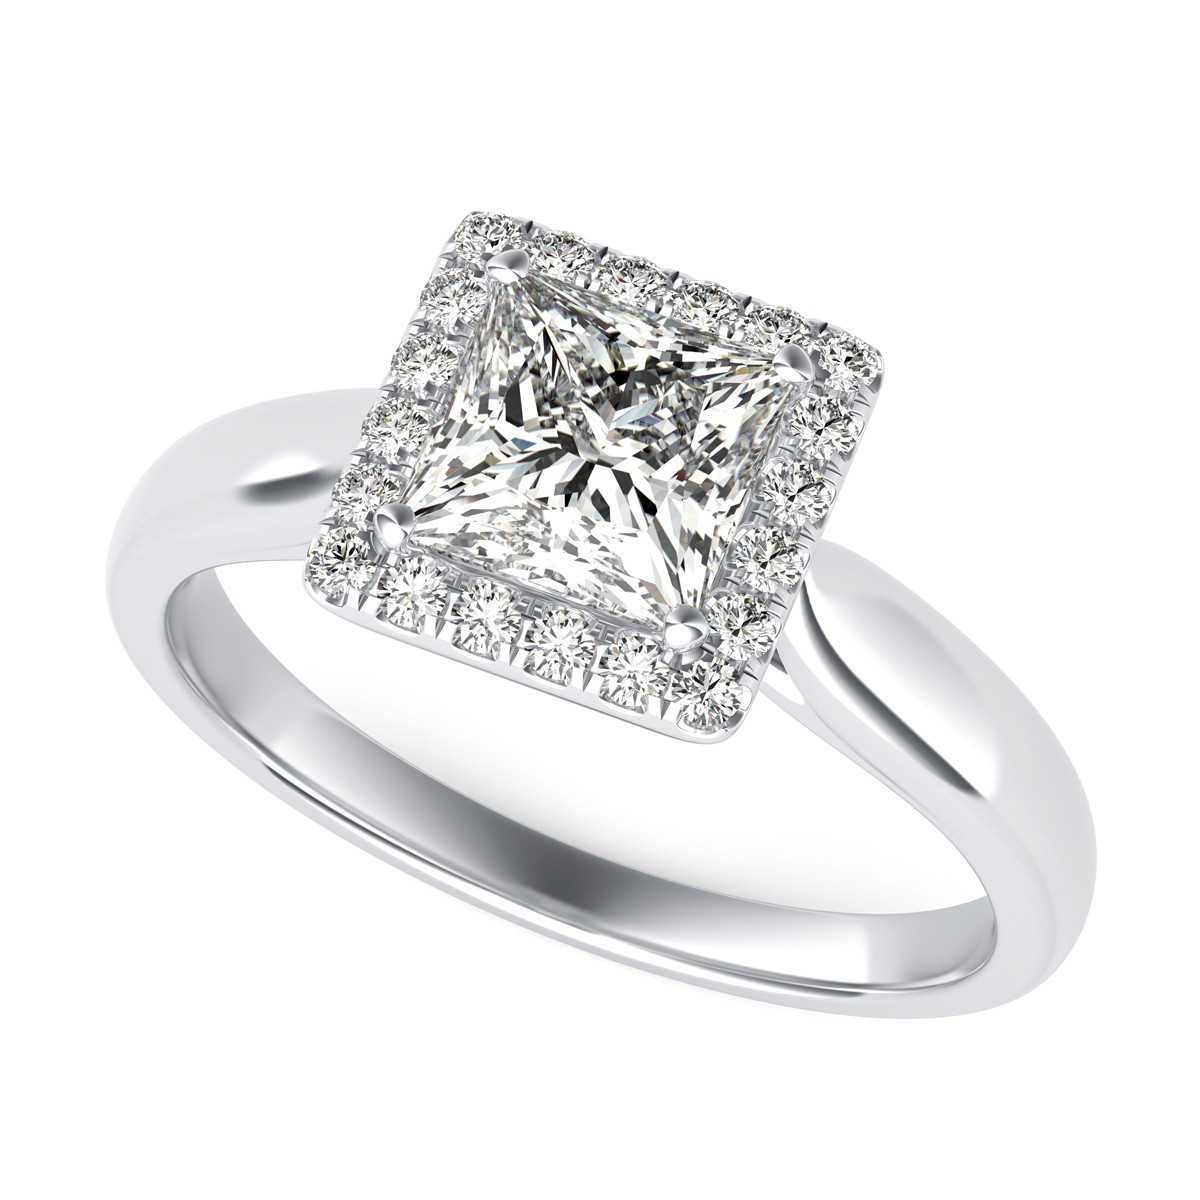 Halo Princess Cut Engagement Rings
 Halo Diamond Engagement Ring